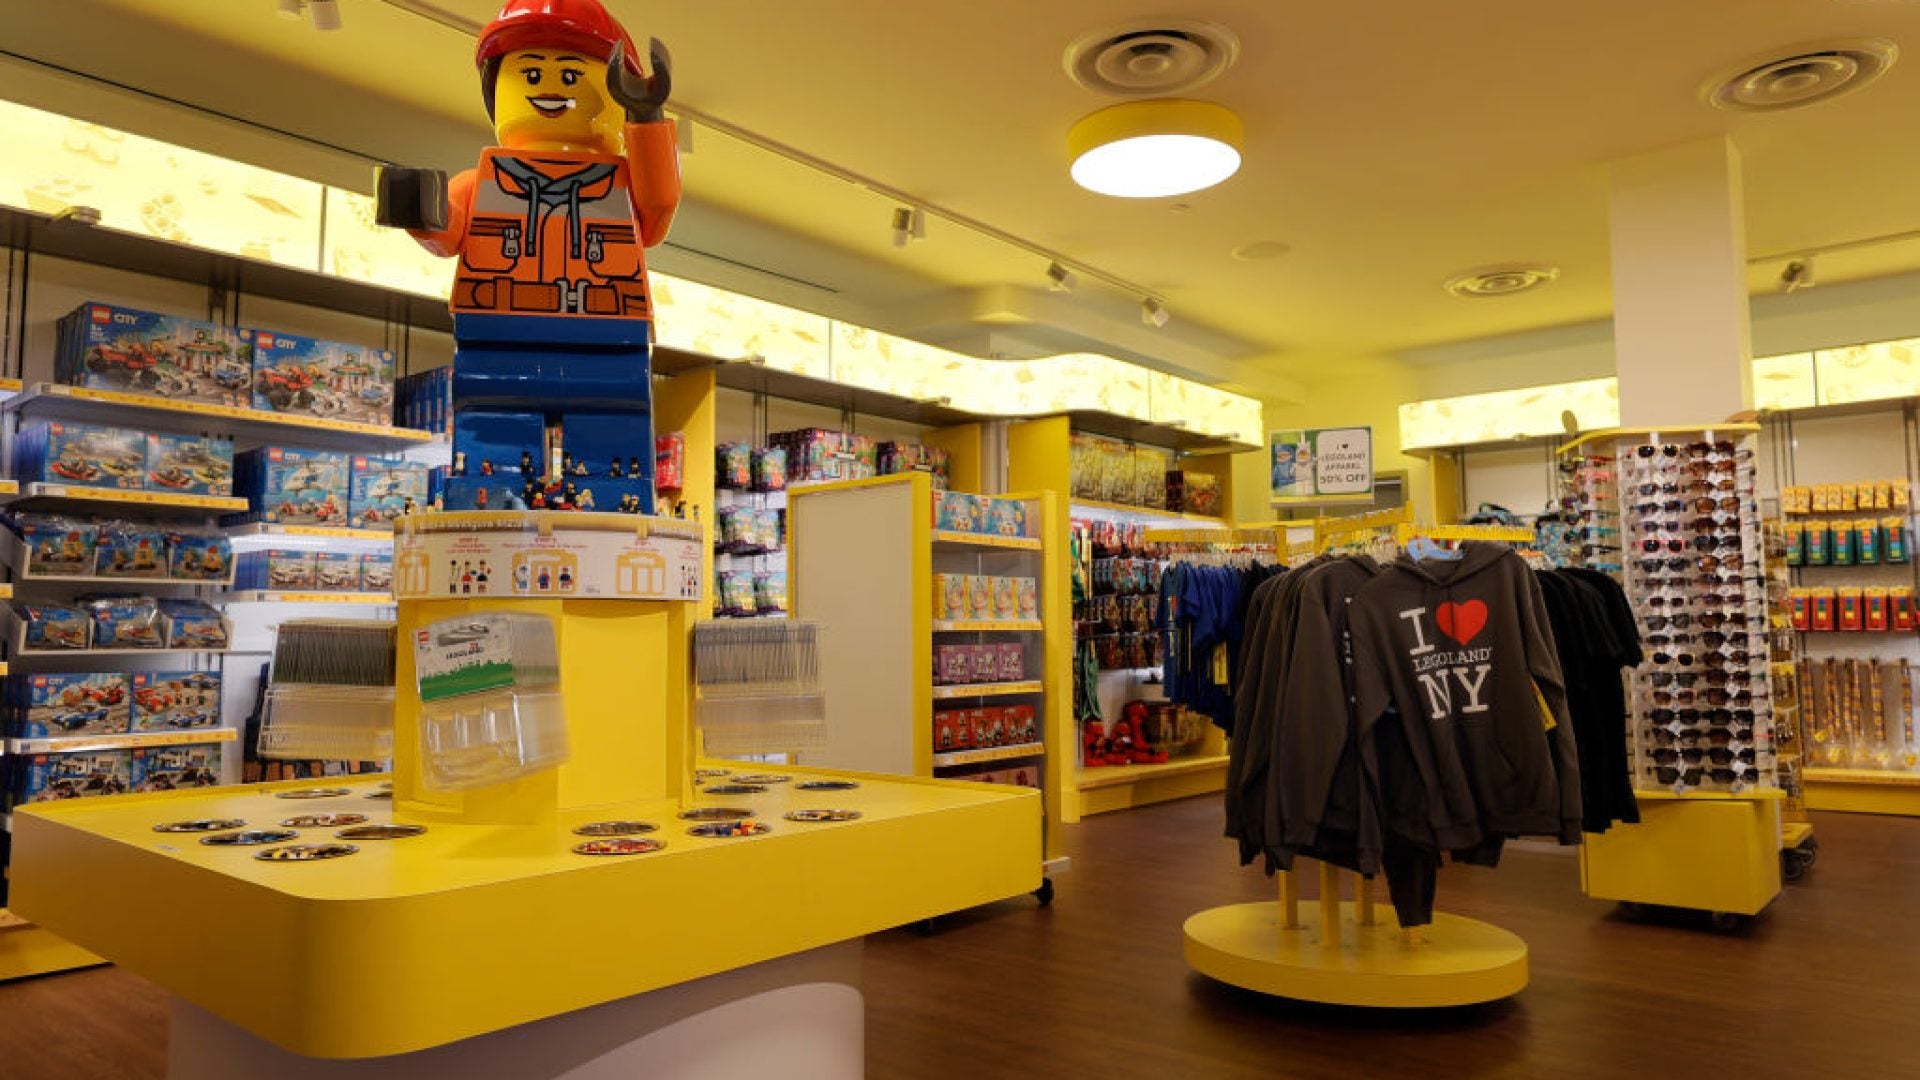 Family Files $1 Million Lawsuit Against Legoland Alleging Racial Discrimination Toward Children